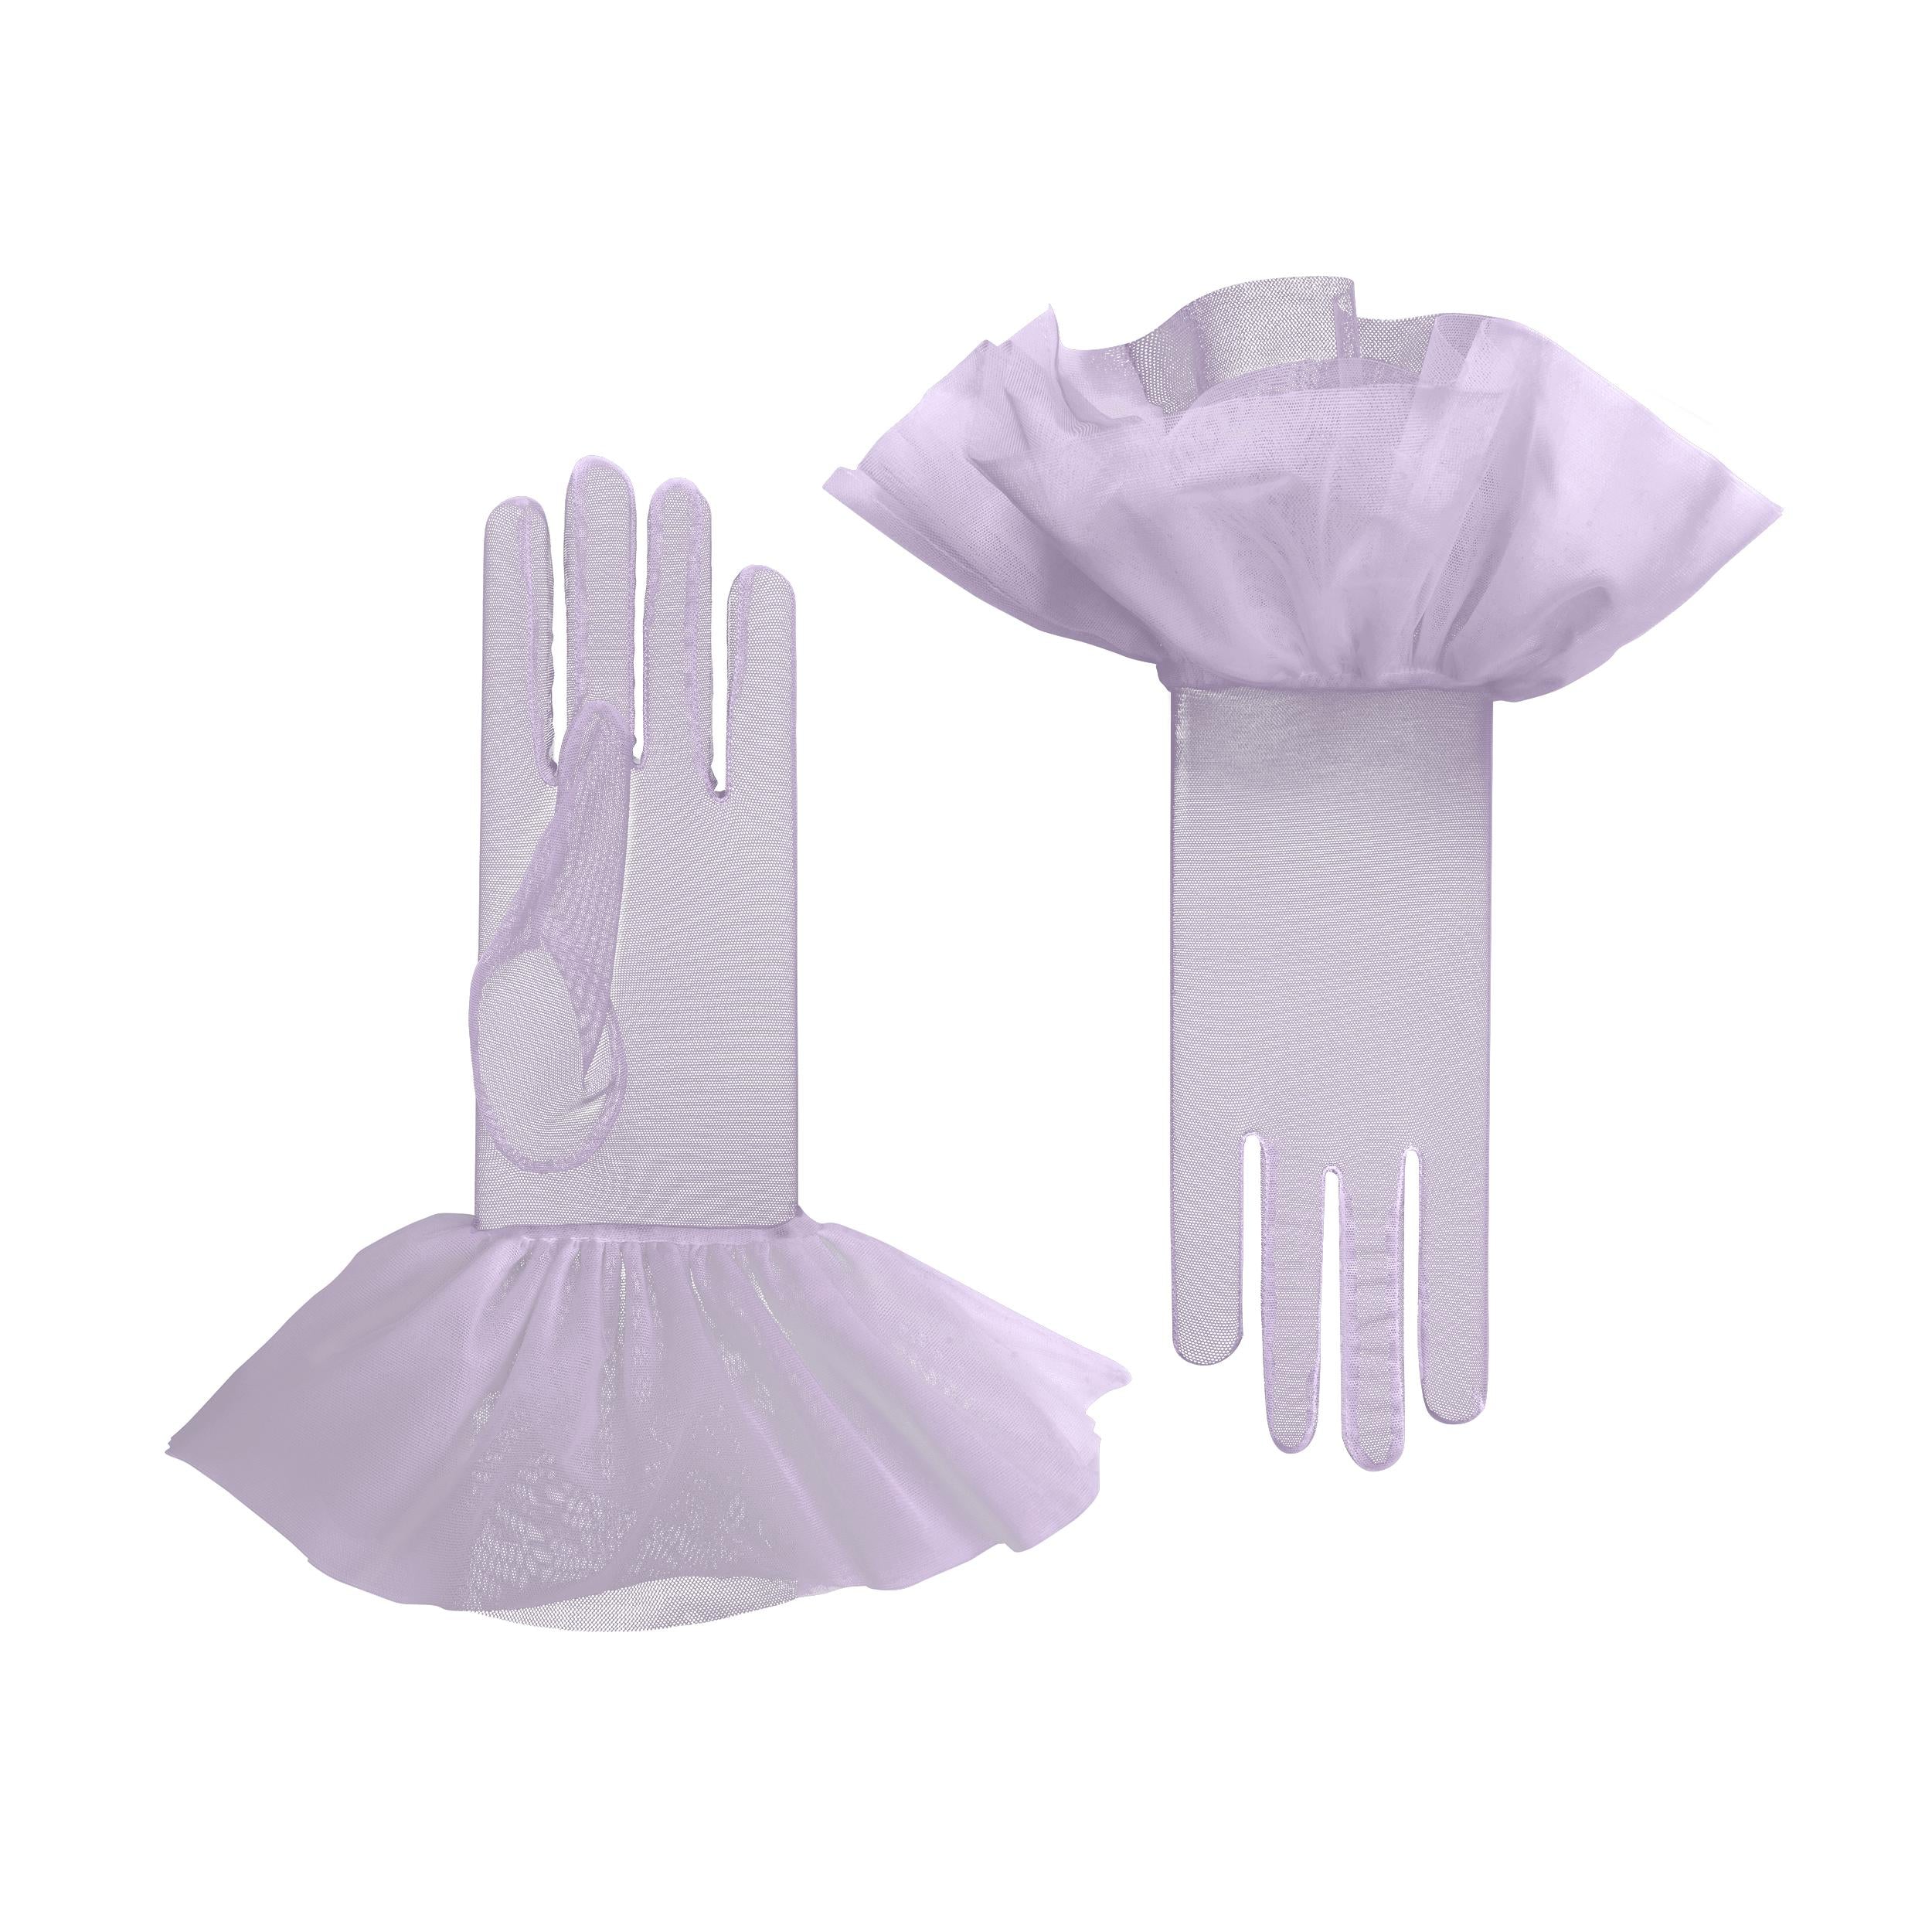 Cornelia James - Purple Tulle Gloves with Harlequin Cuff - Lara - Size Large (8½) - Handmade Tulle Gloves by Cornelia James